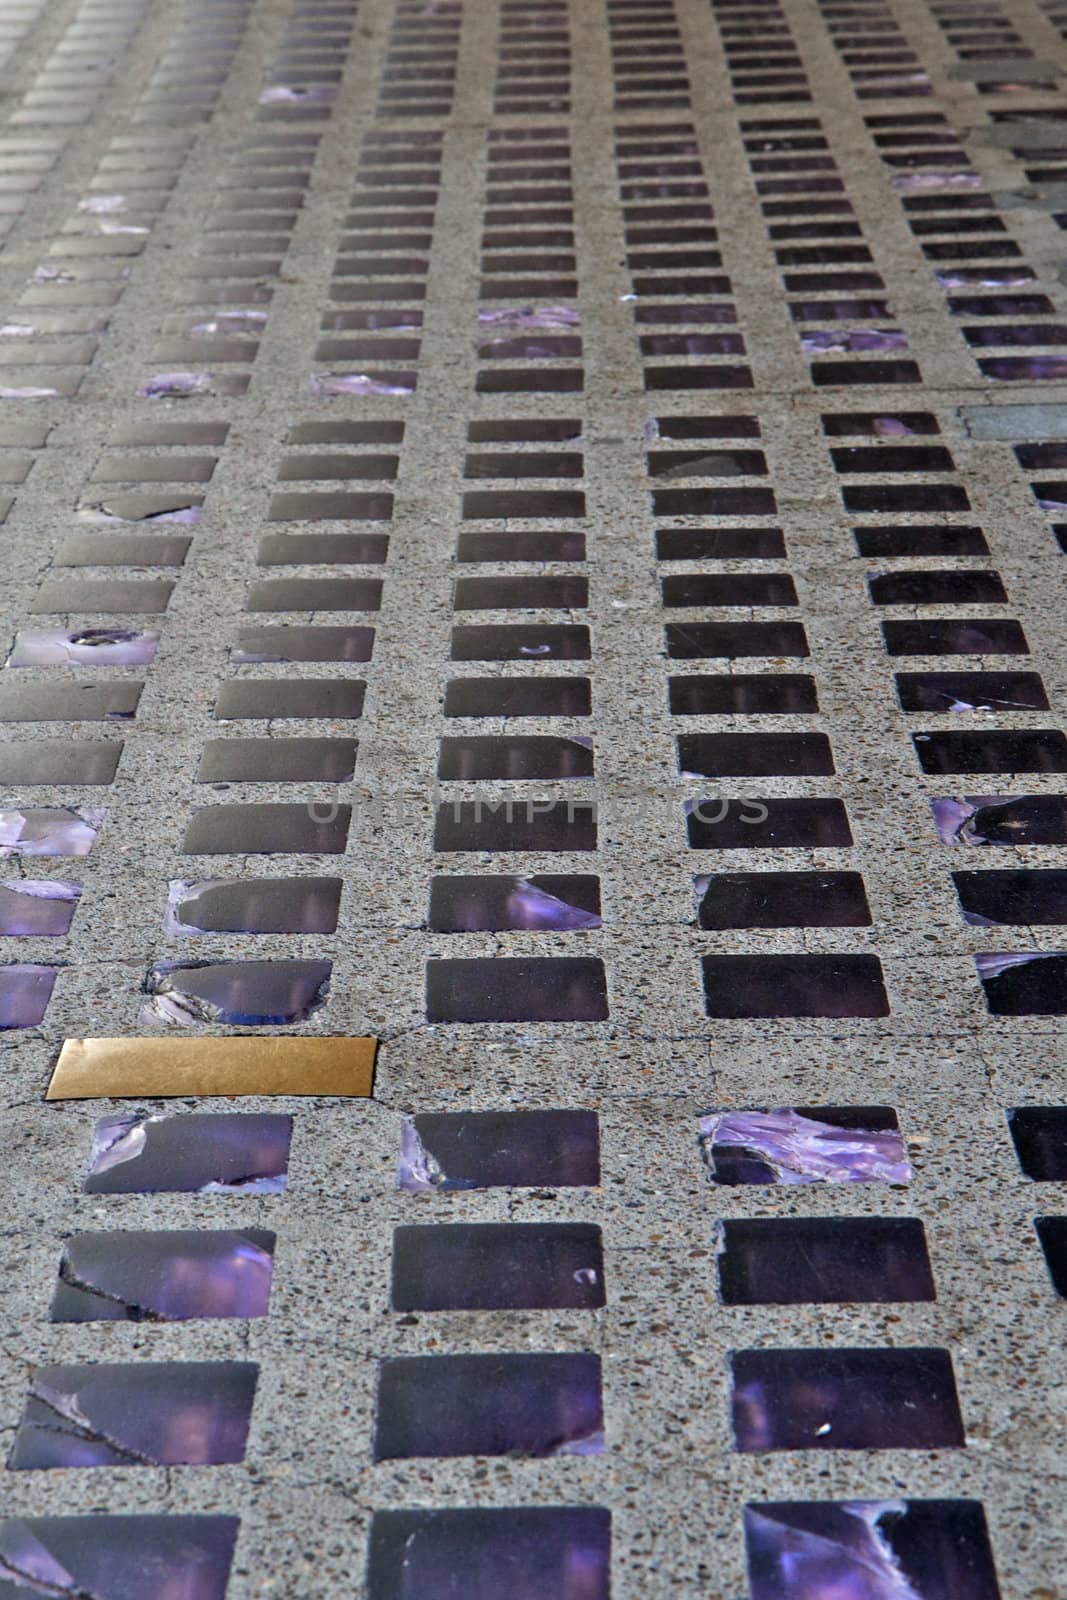 City sidewalk with imbedded purple glass sklights